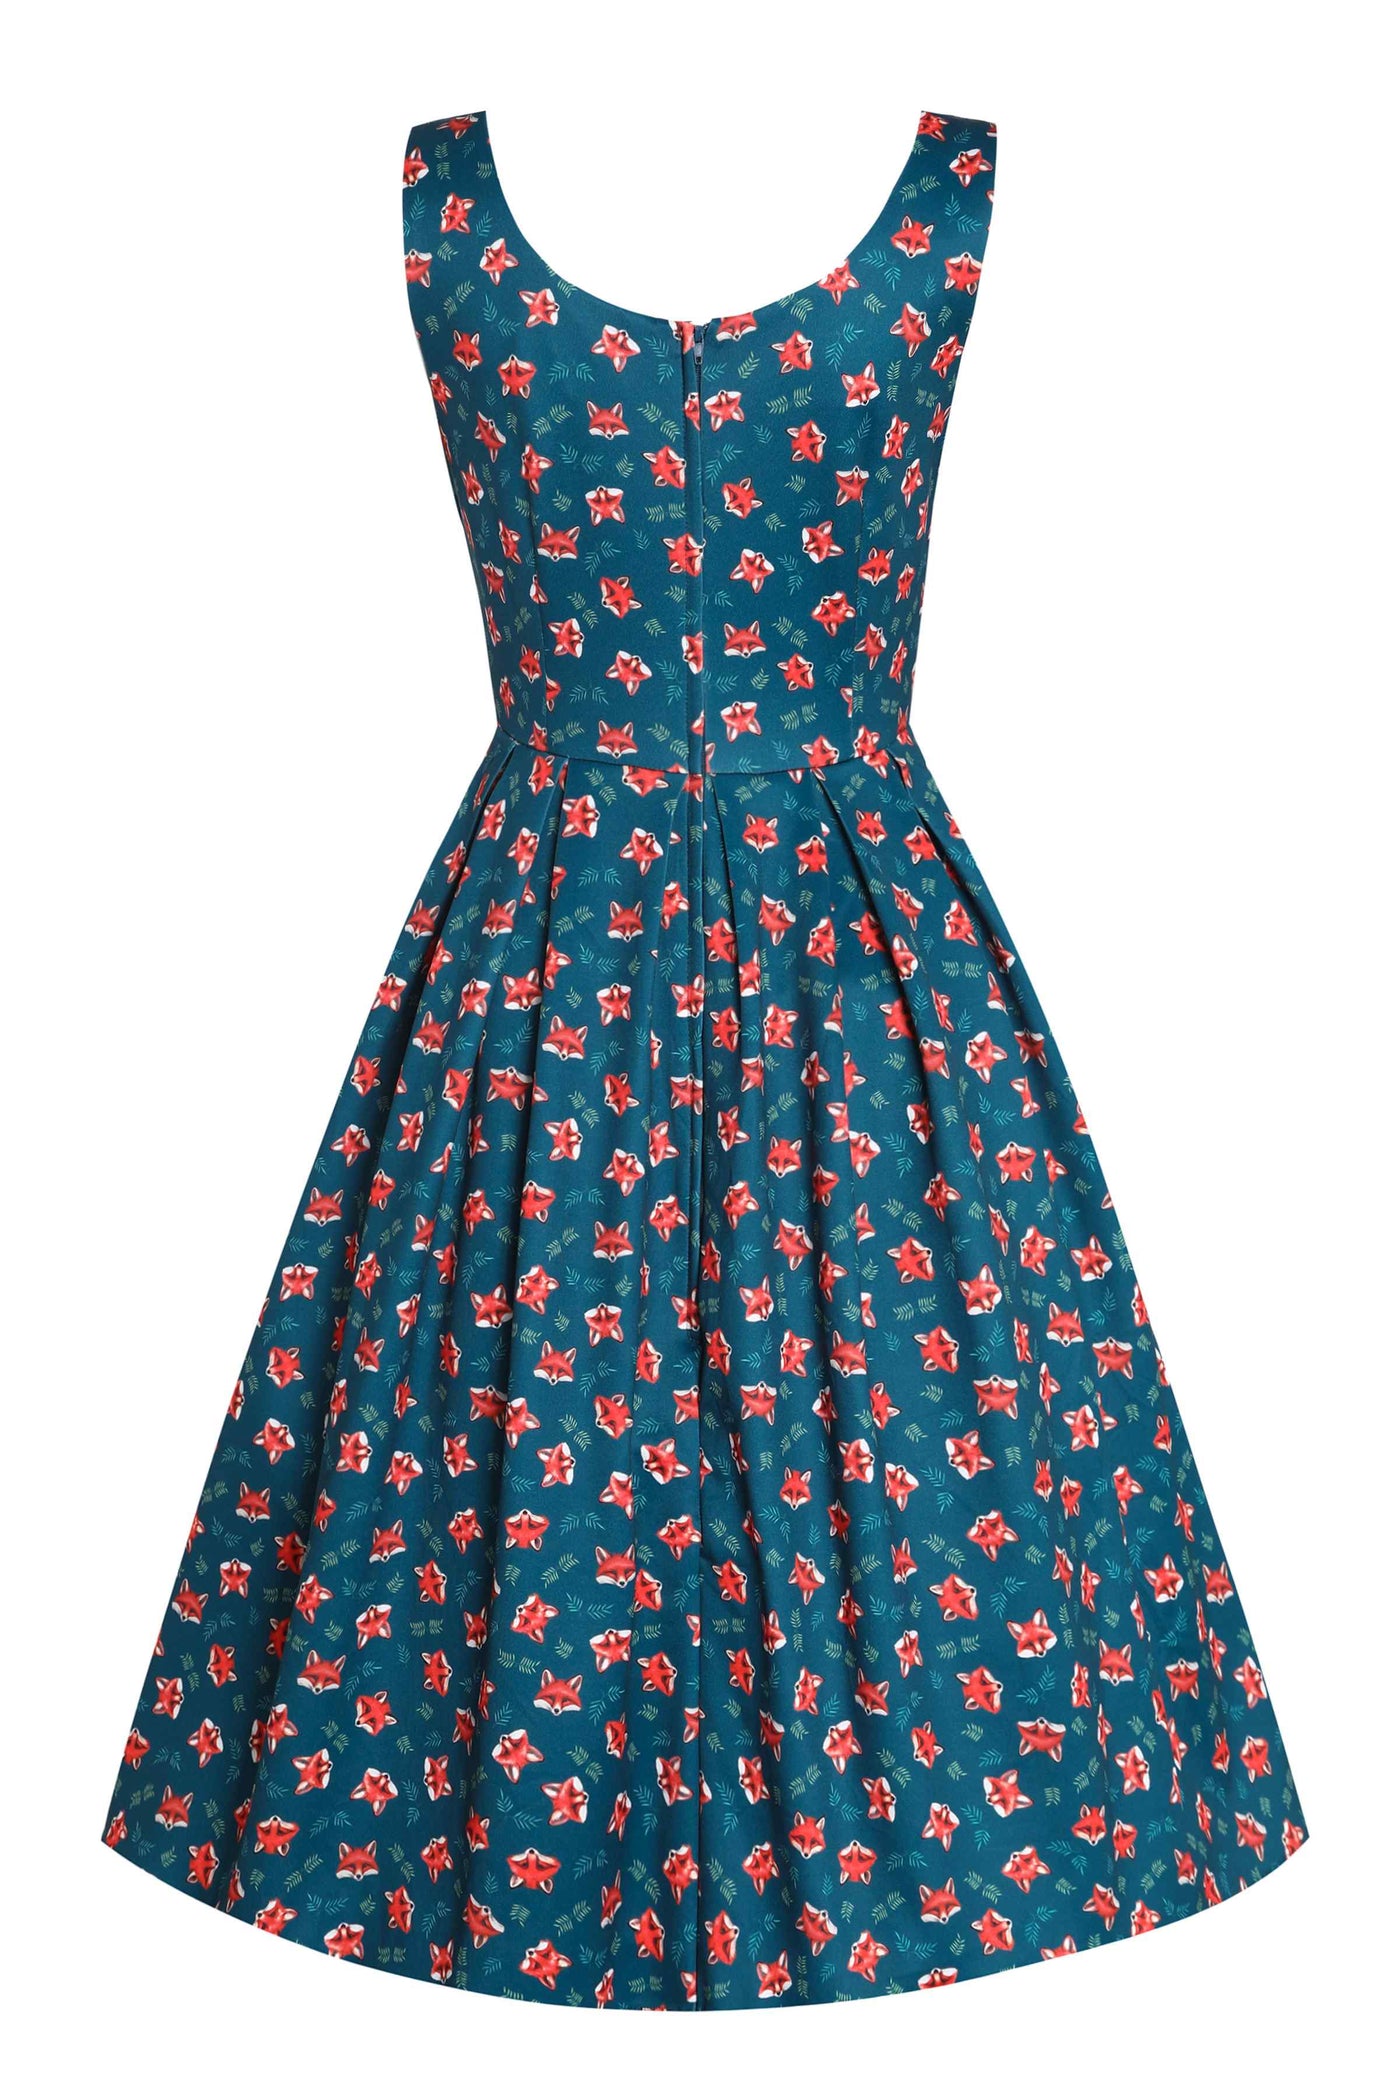 Back view of Pleated Retro Dress in Dark Blue Fox Print